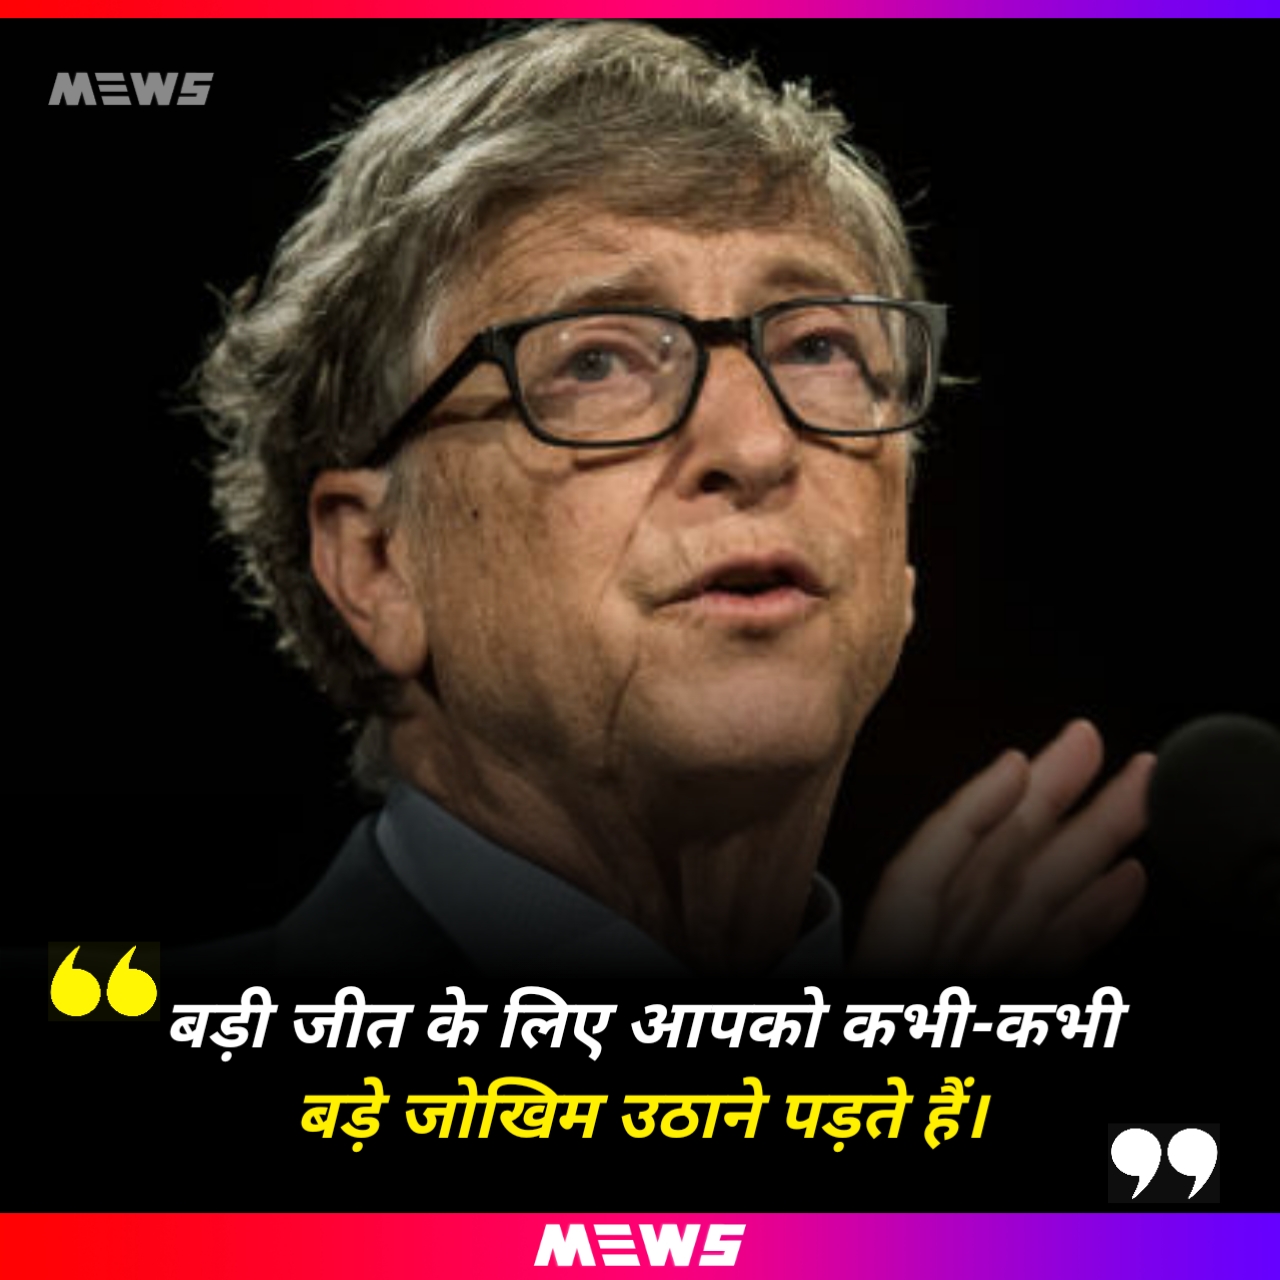 Bill Gates quotes in Hindi